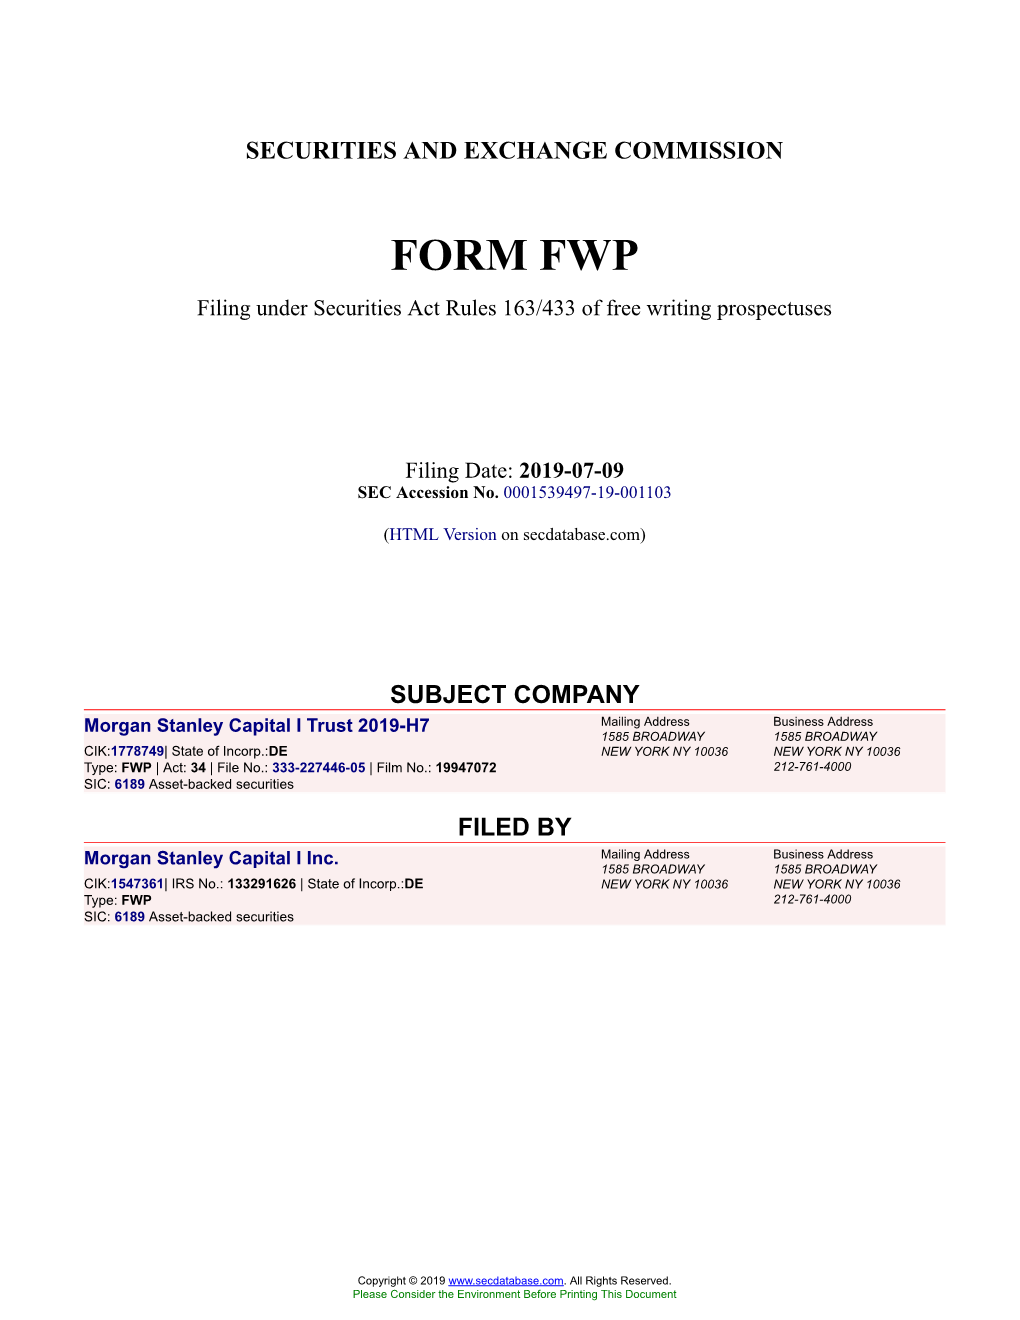 Morgan Stanley Capital I Trust 2019-H7 Form FWP Filed 2019-07-09